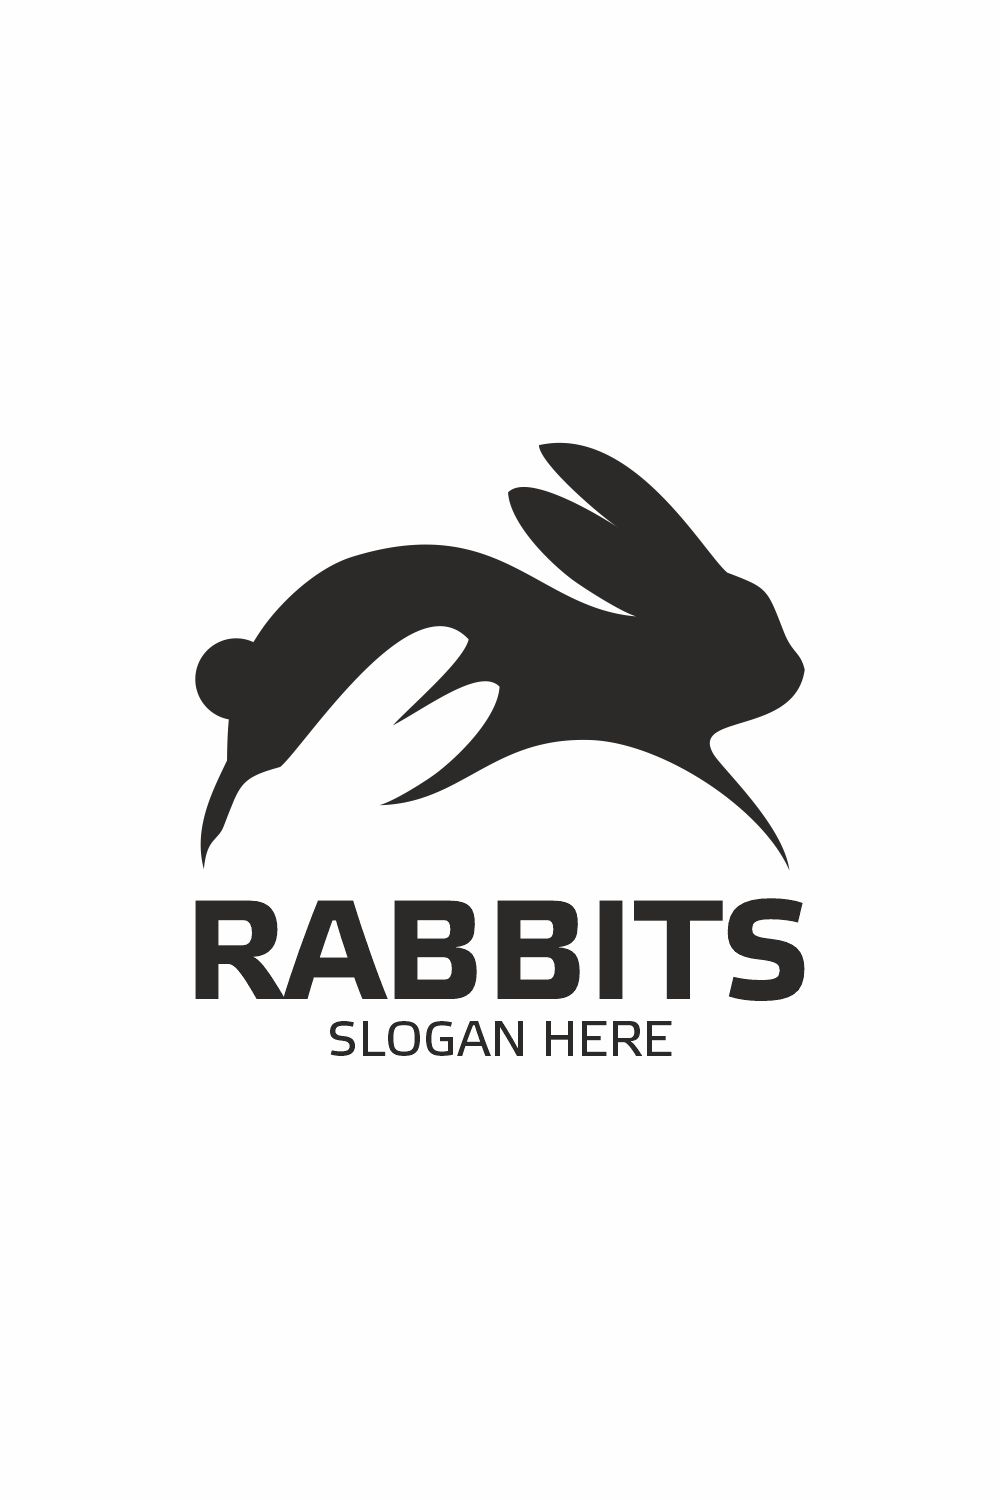 Rabbits logo pinterest preview image.